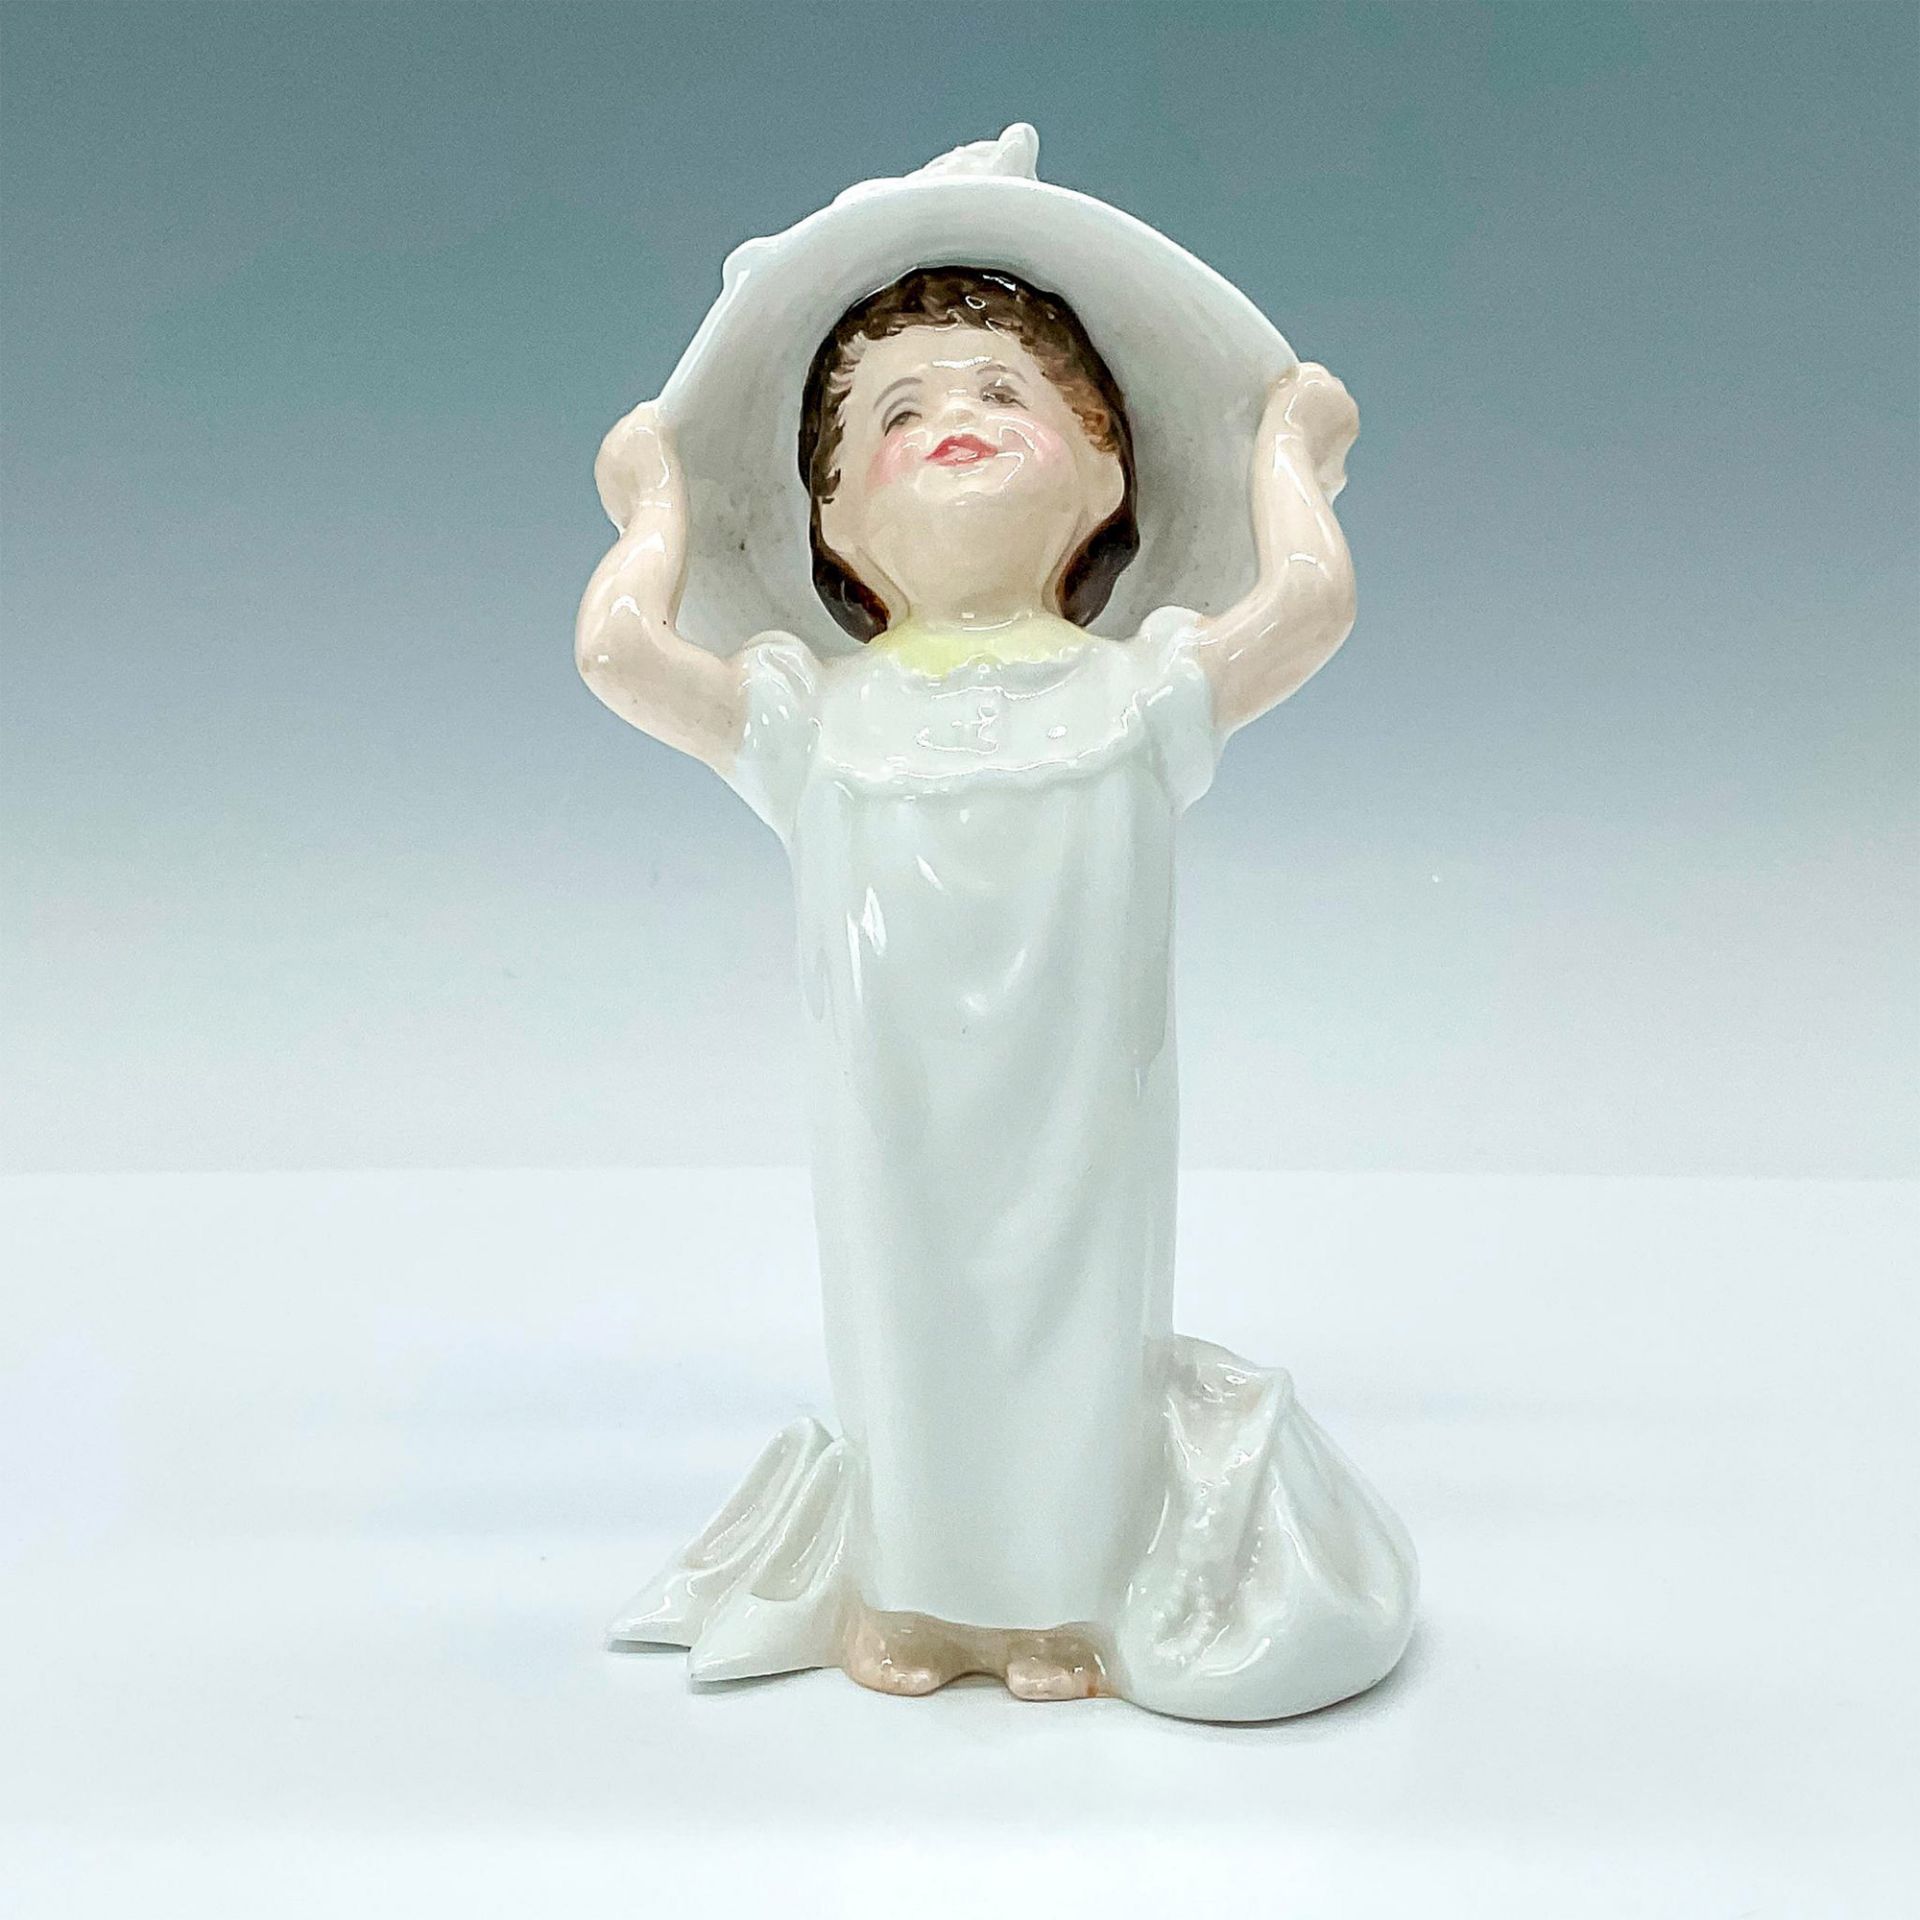 Make Believe - HN2224 - Royal Doulton Figurine